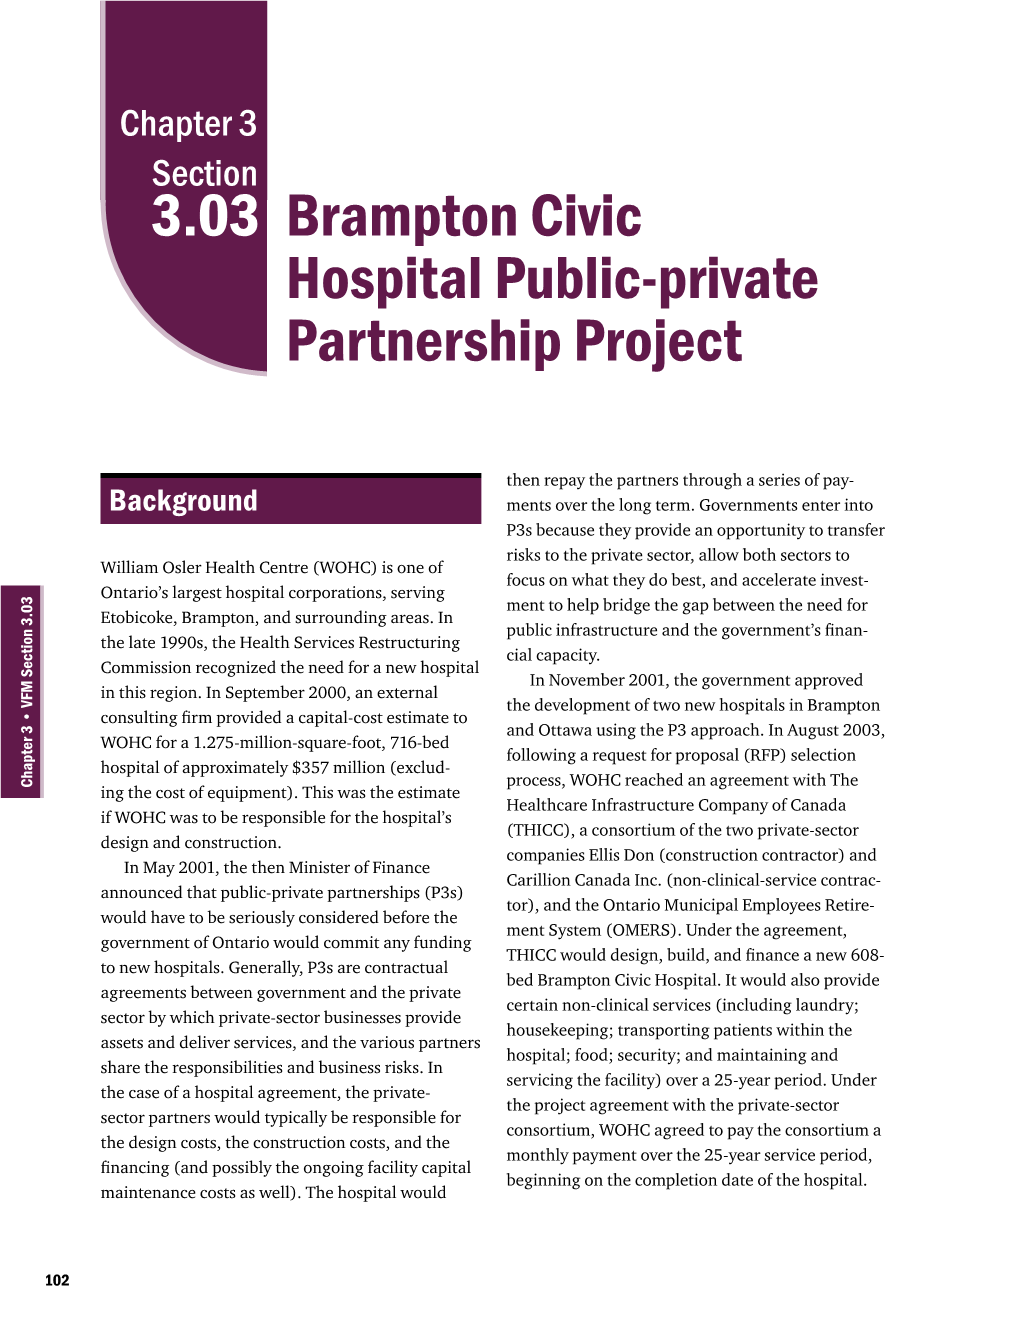 3.03 Brampton Civic Hospital Public-Private Partnership Project